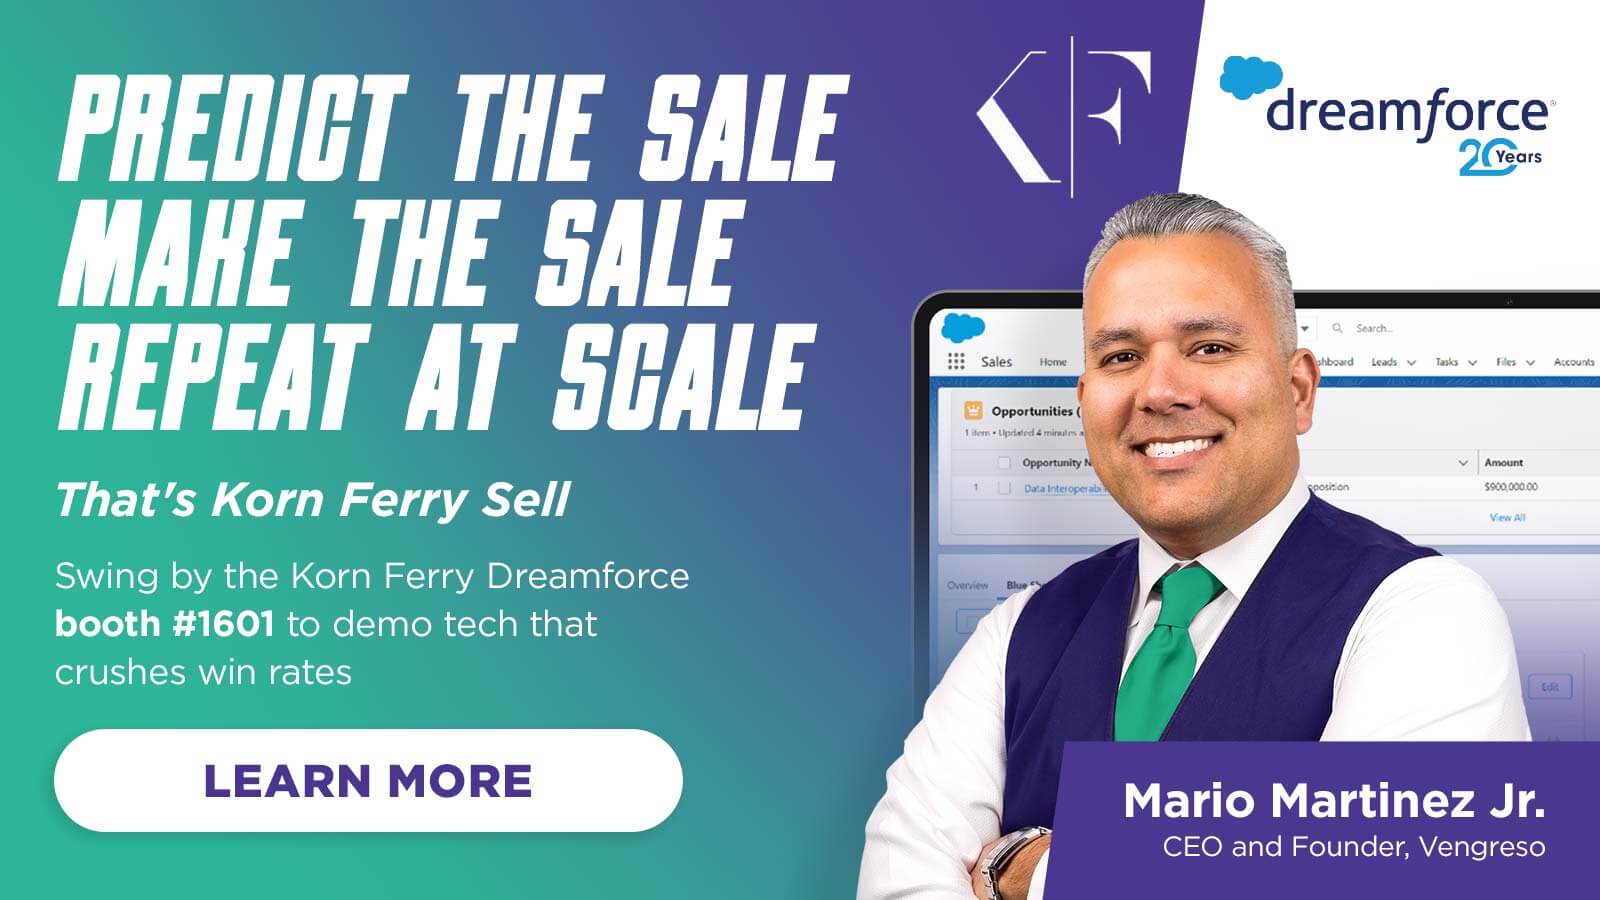 dreamforce 2022 cta mario martinez jr smiling repeat the sale make the sale repeat at scale 